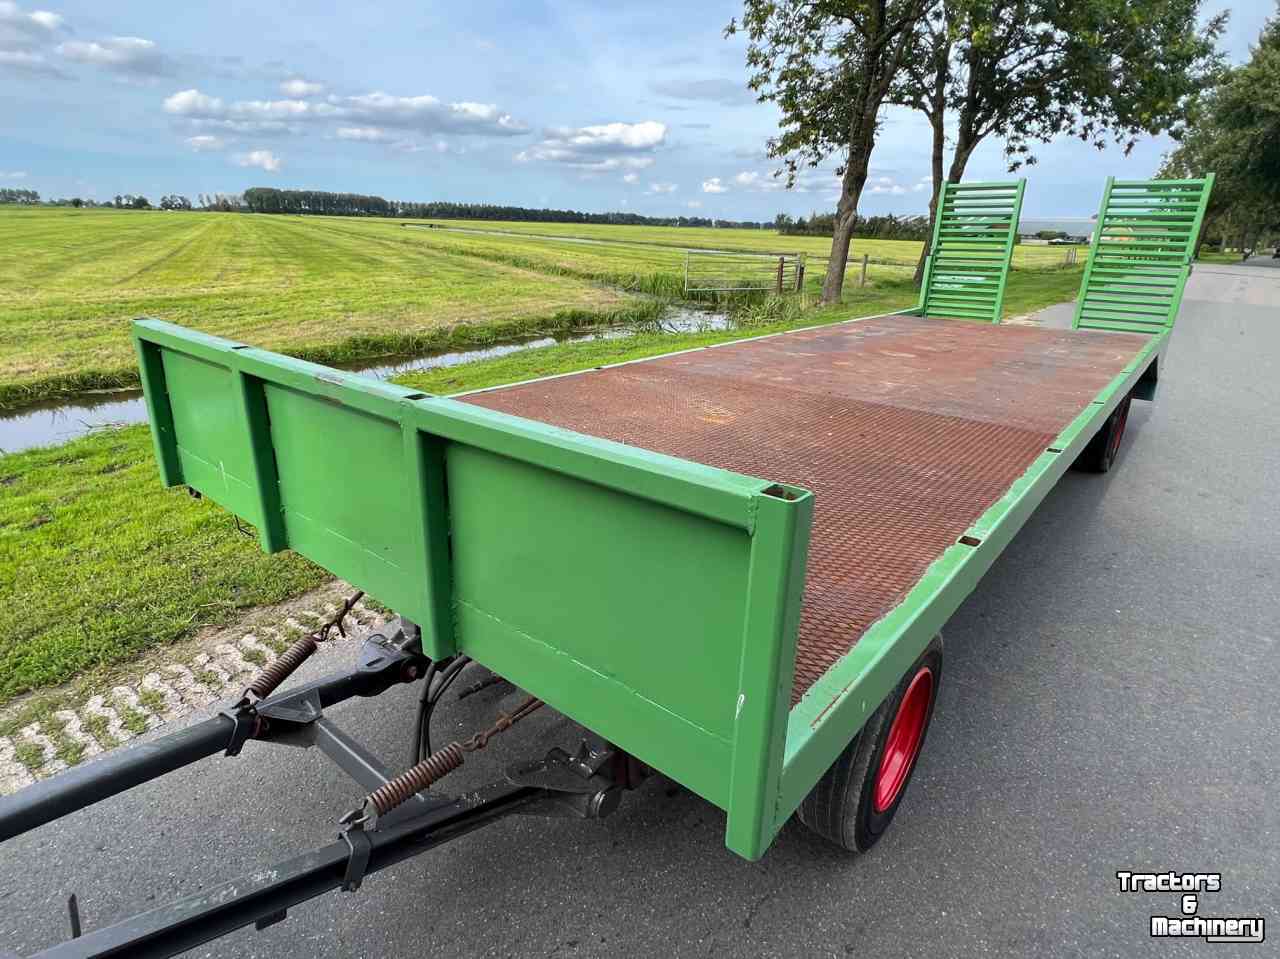 Remorque  fendt dieplader / balenwagen landbouwwagen oprijkar